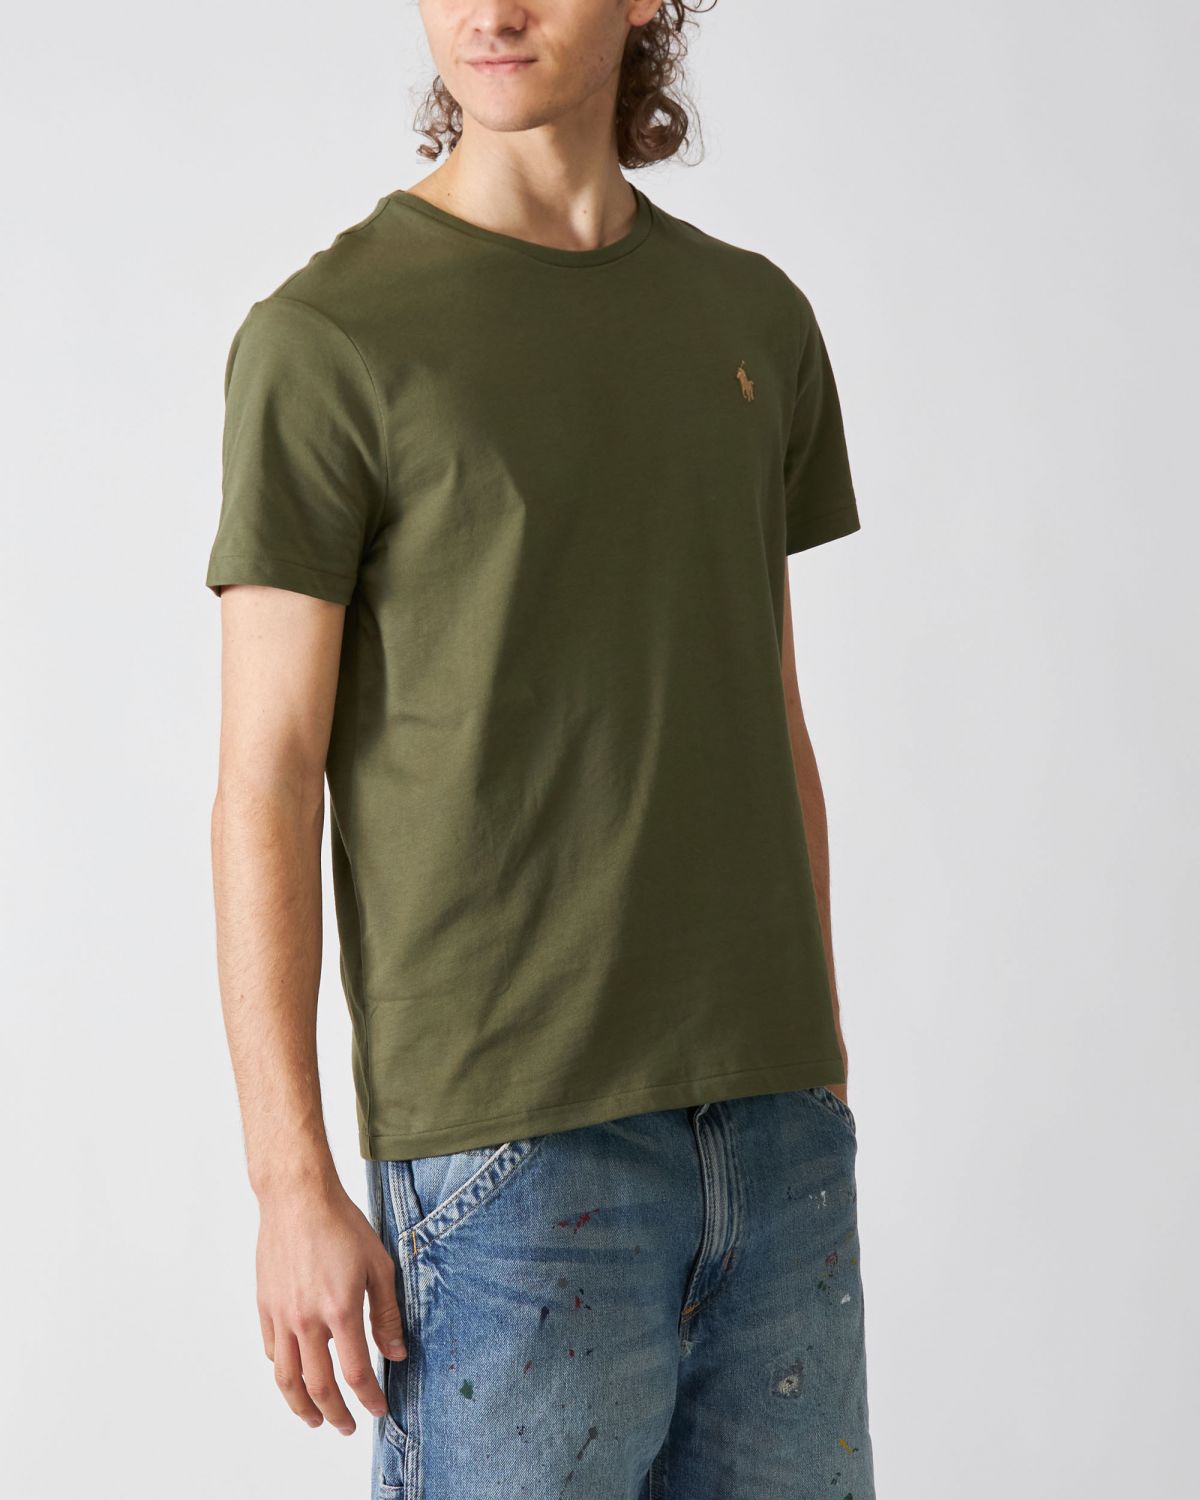 T-Shirt Militare